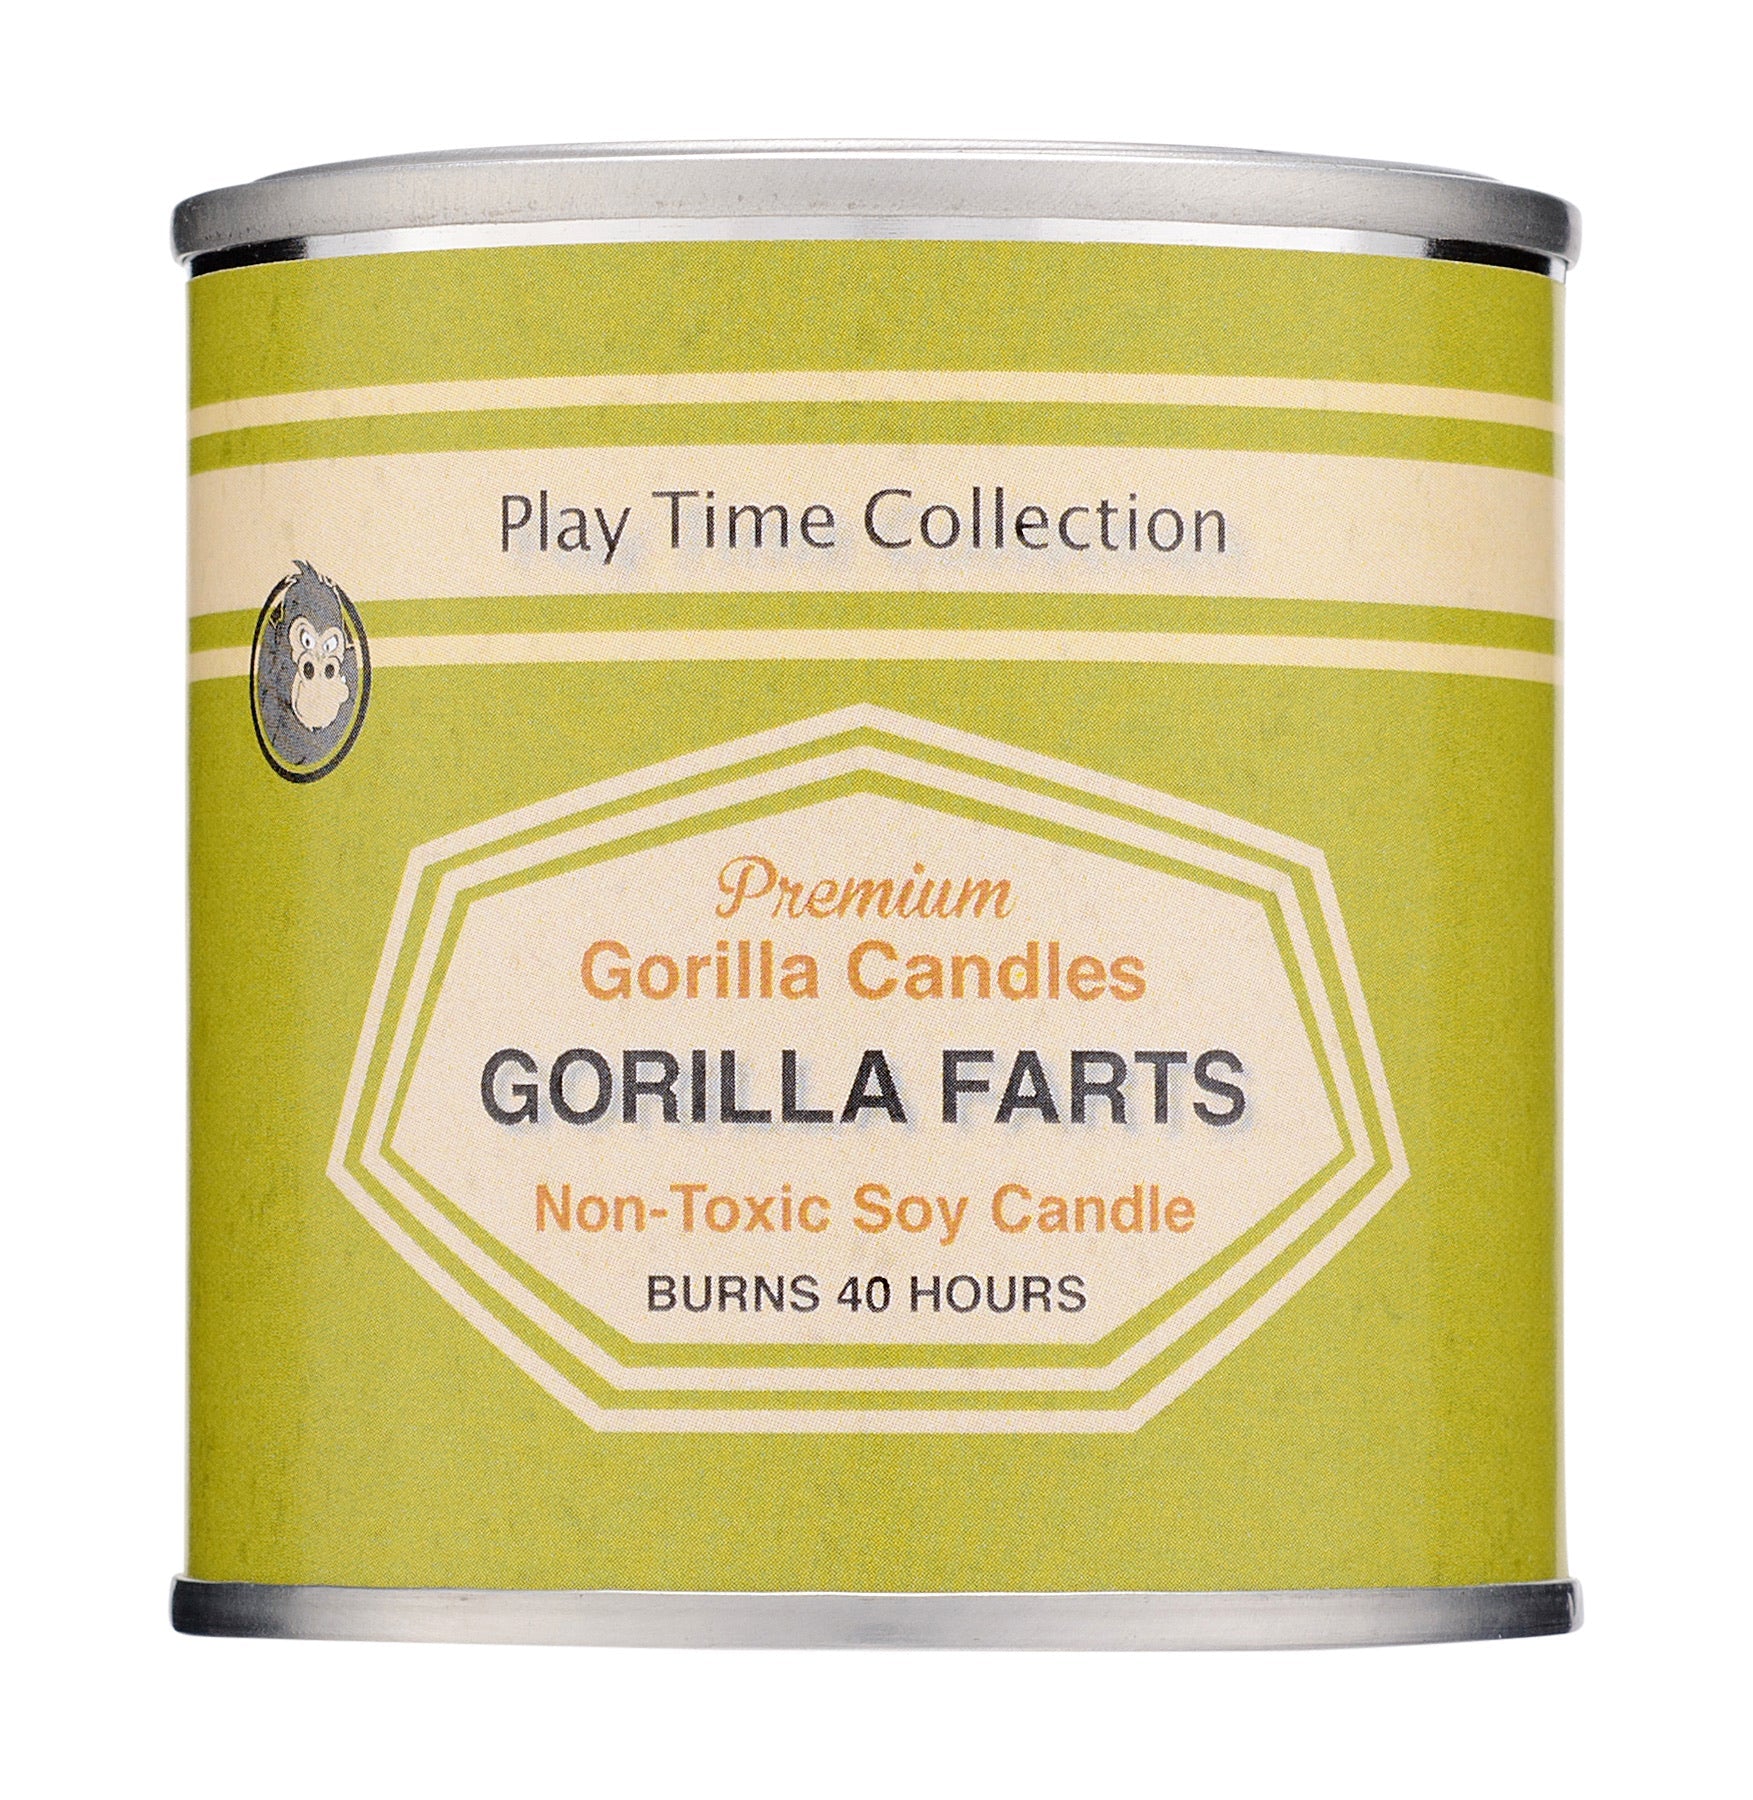 Gorilla Farts by Gorilla Candles™